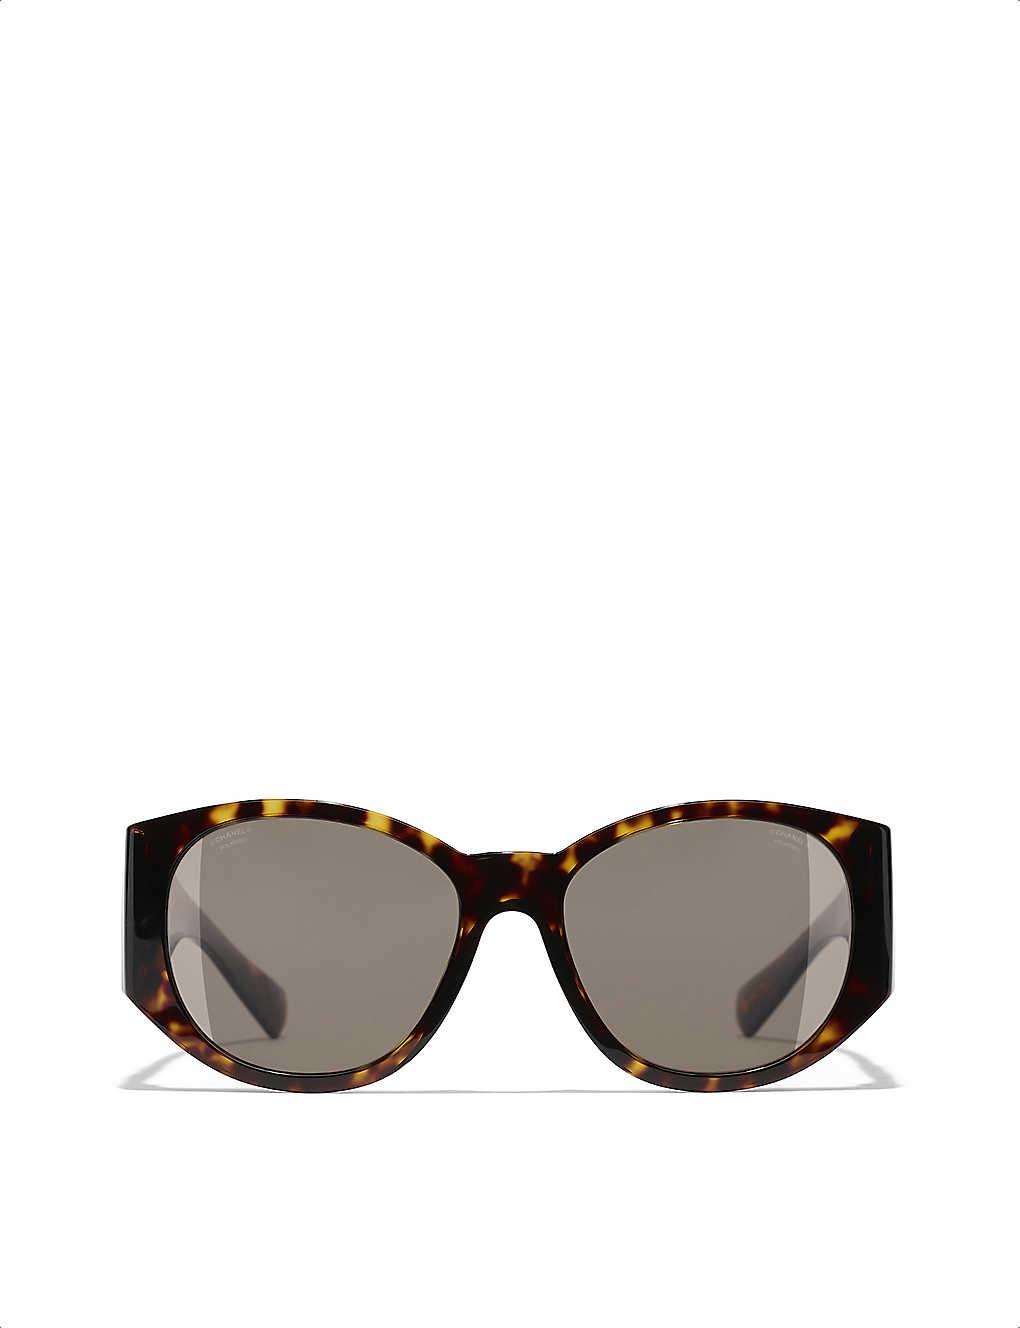 Chanel - Oval Sunglasses - Black Gold Mirror - Chanel Eyewear - Avvenice